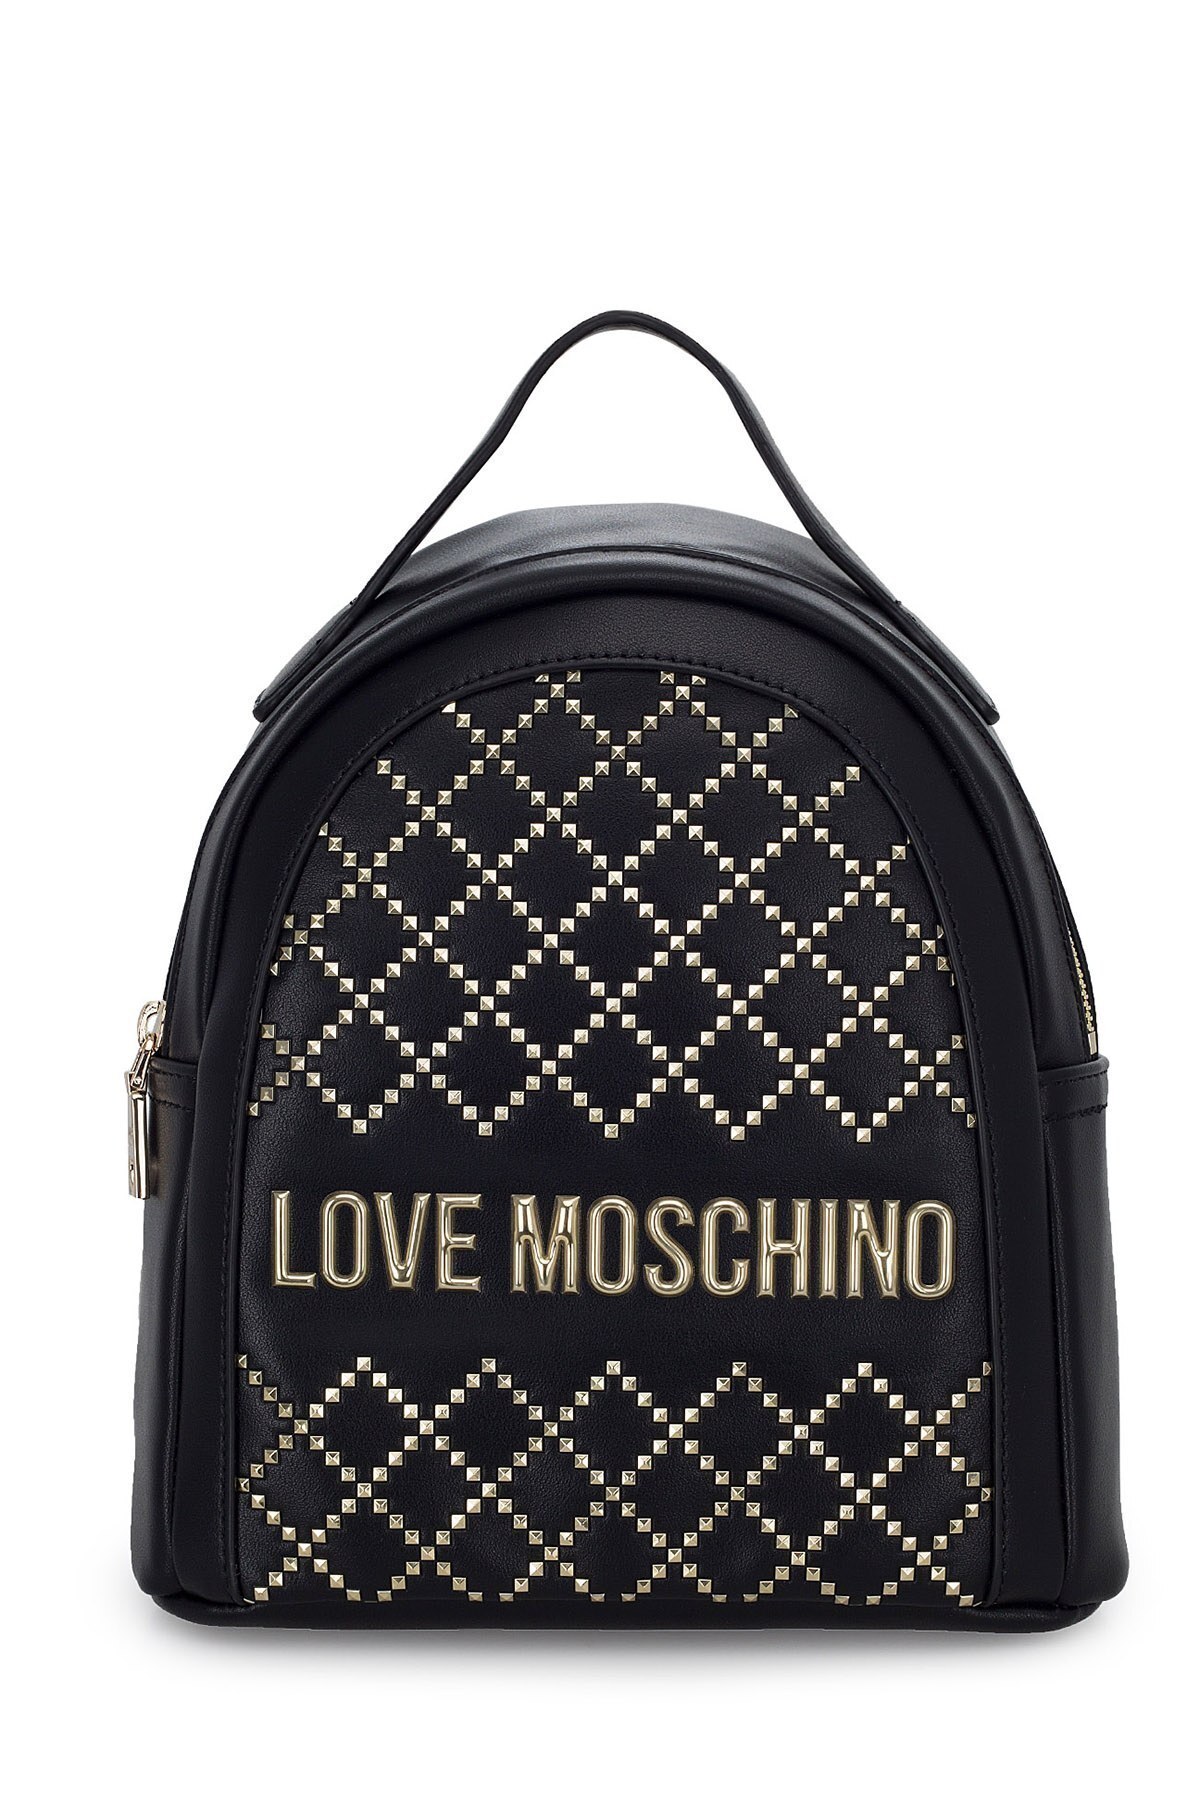 Love Moschino Logo Baskılı Ayarlanabilir Askılı Bayan Çanta JC4051PP1BLG0000 SİYAH